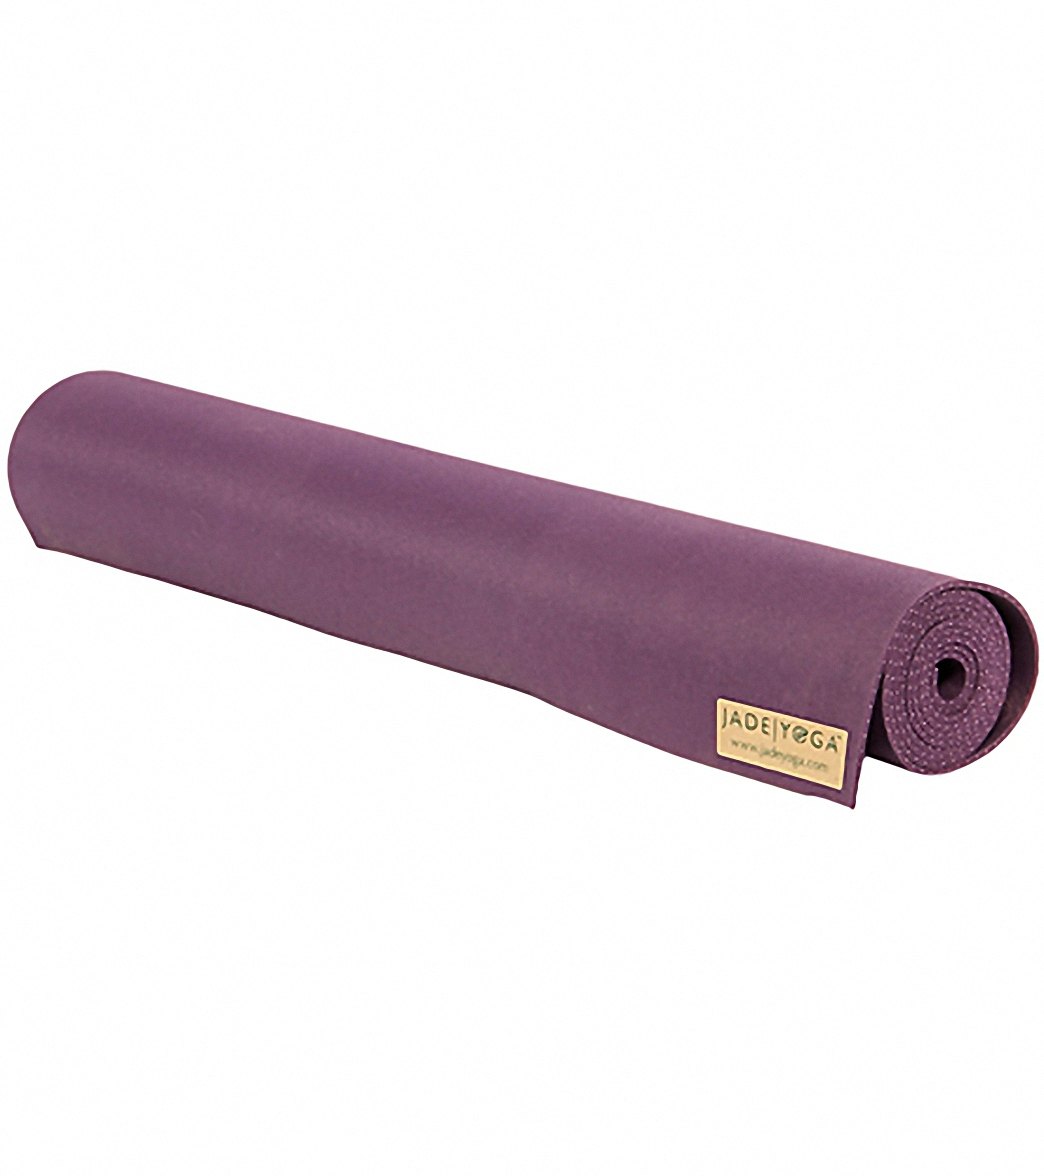 Jade Yoga Travel Natural Rubber Yoga Mat 68 3.5mm at